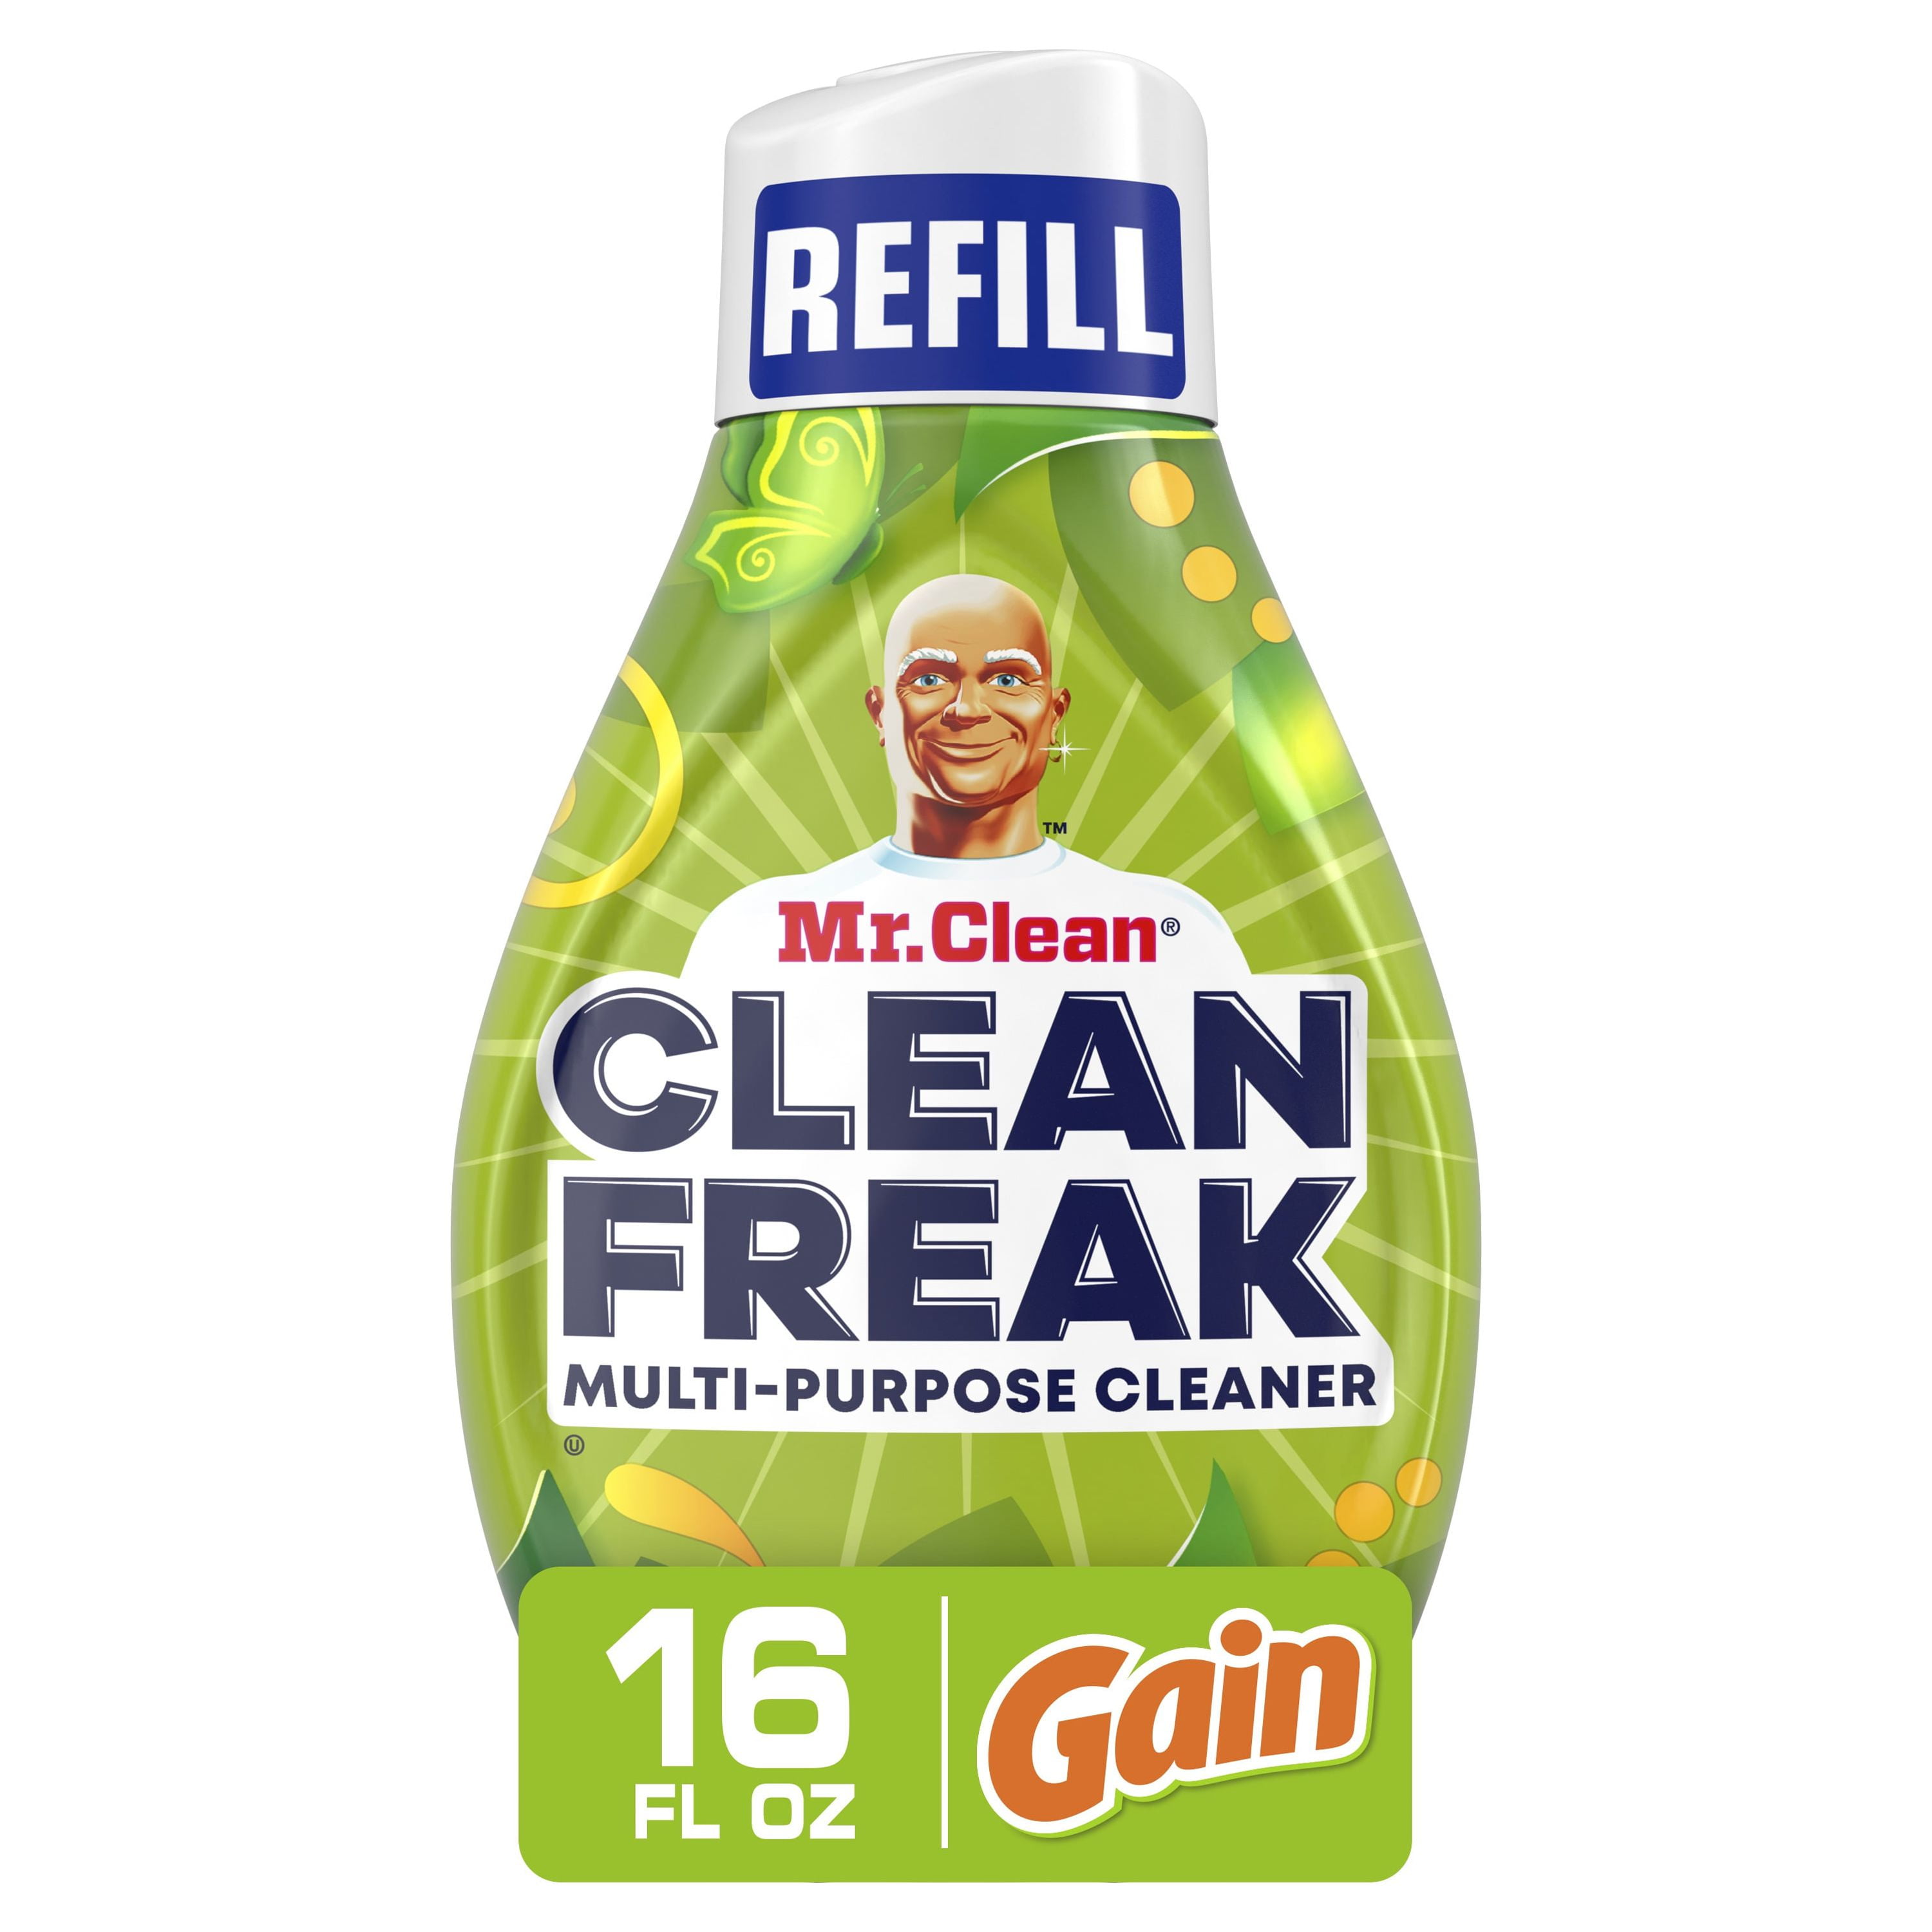 2) Mr. Clean Clean Freak Wild Flower Deep Cleaning Mist Refill, 16